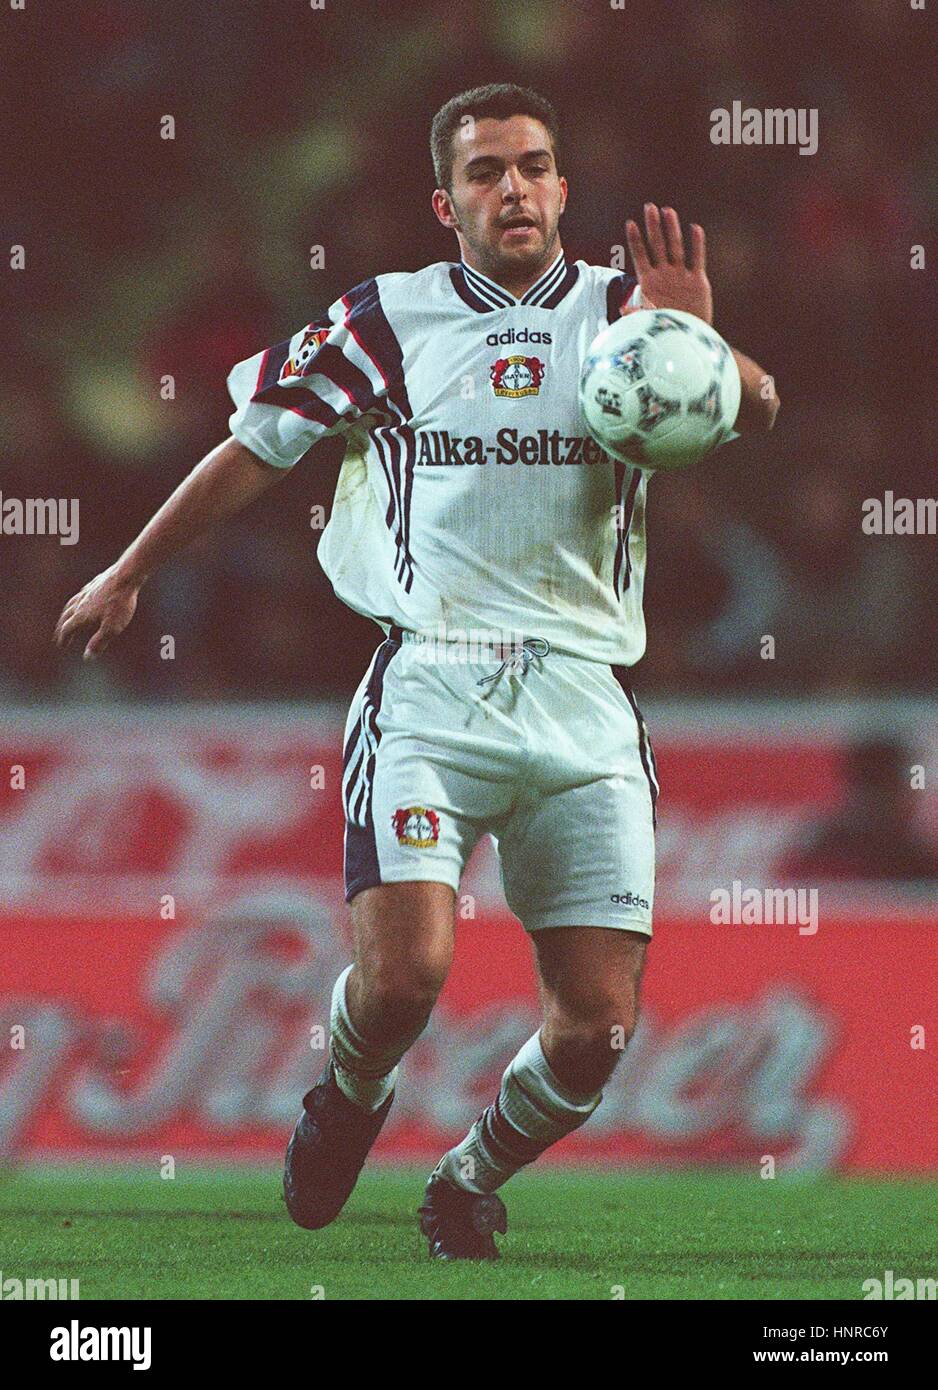 ZE ELIAS TSV BAYER 04 LEVERKUSEN 24 Octobre 1996 Banque D'Images